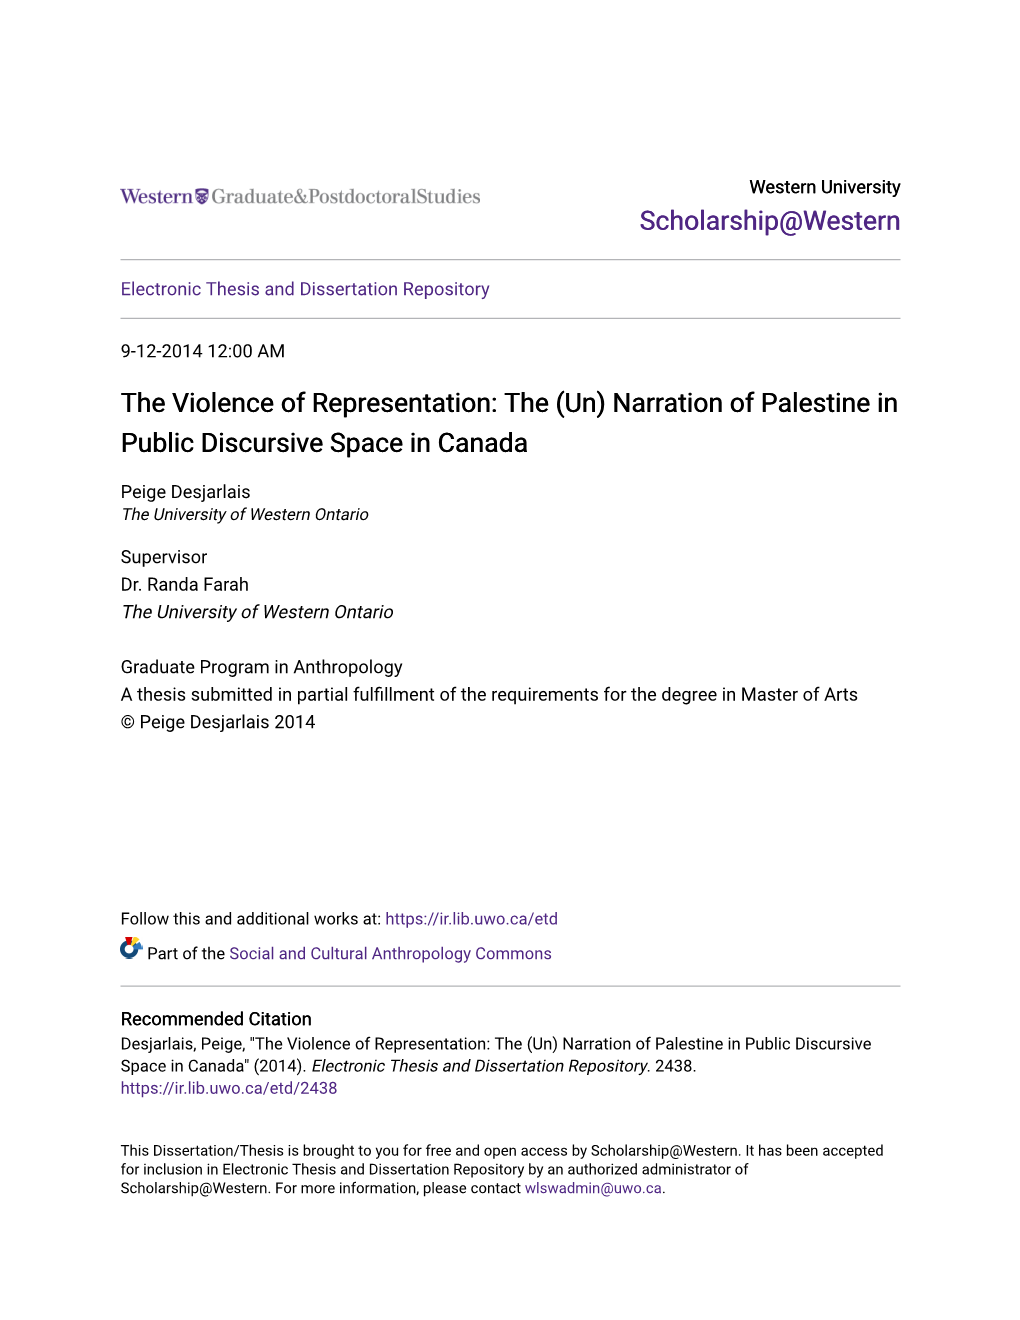 Narration of Palestine in Public Discursive Space in Canada